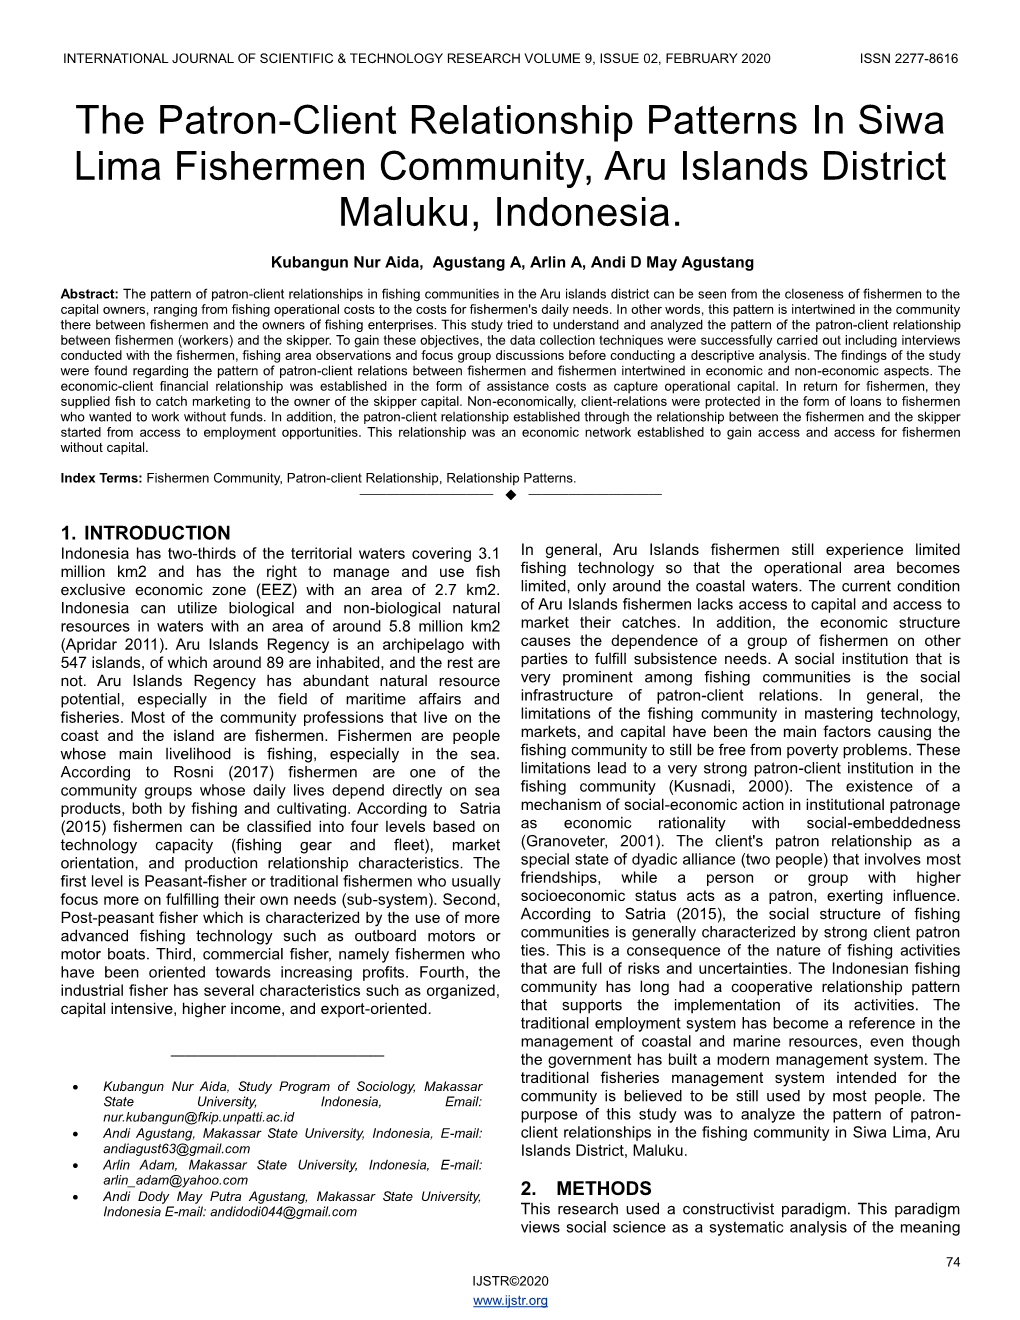 The Patron-Client Relationship Patterns in Siwa Lima Fishermen Community, Aru Islands District Maluku, Indonesia